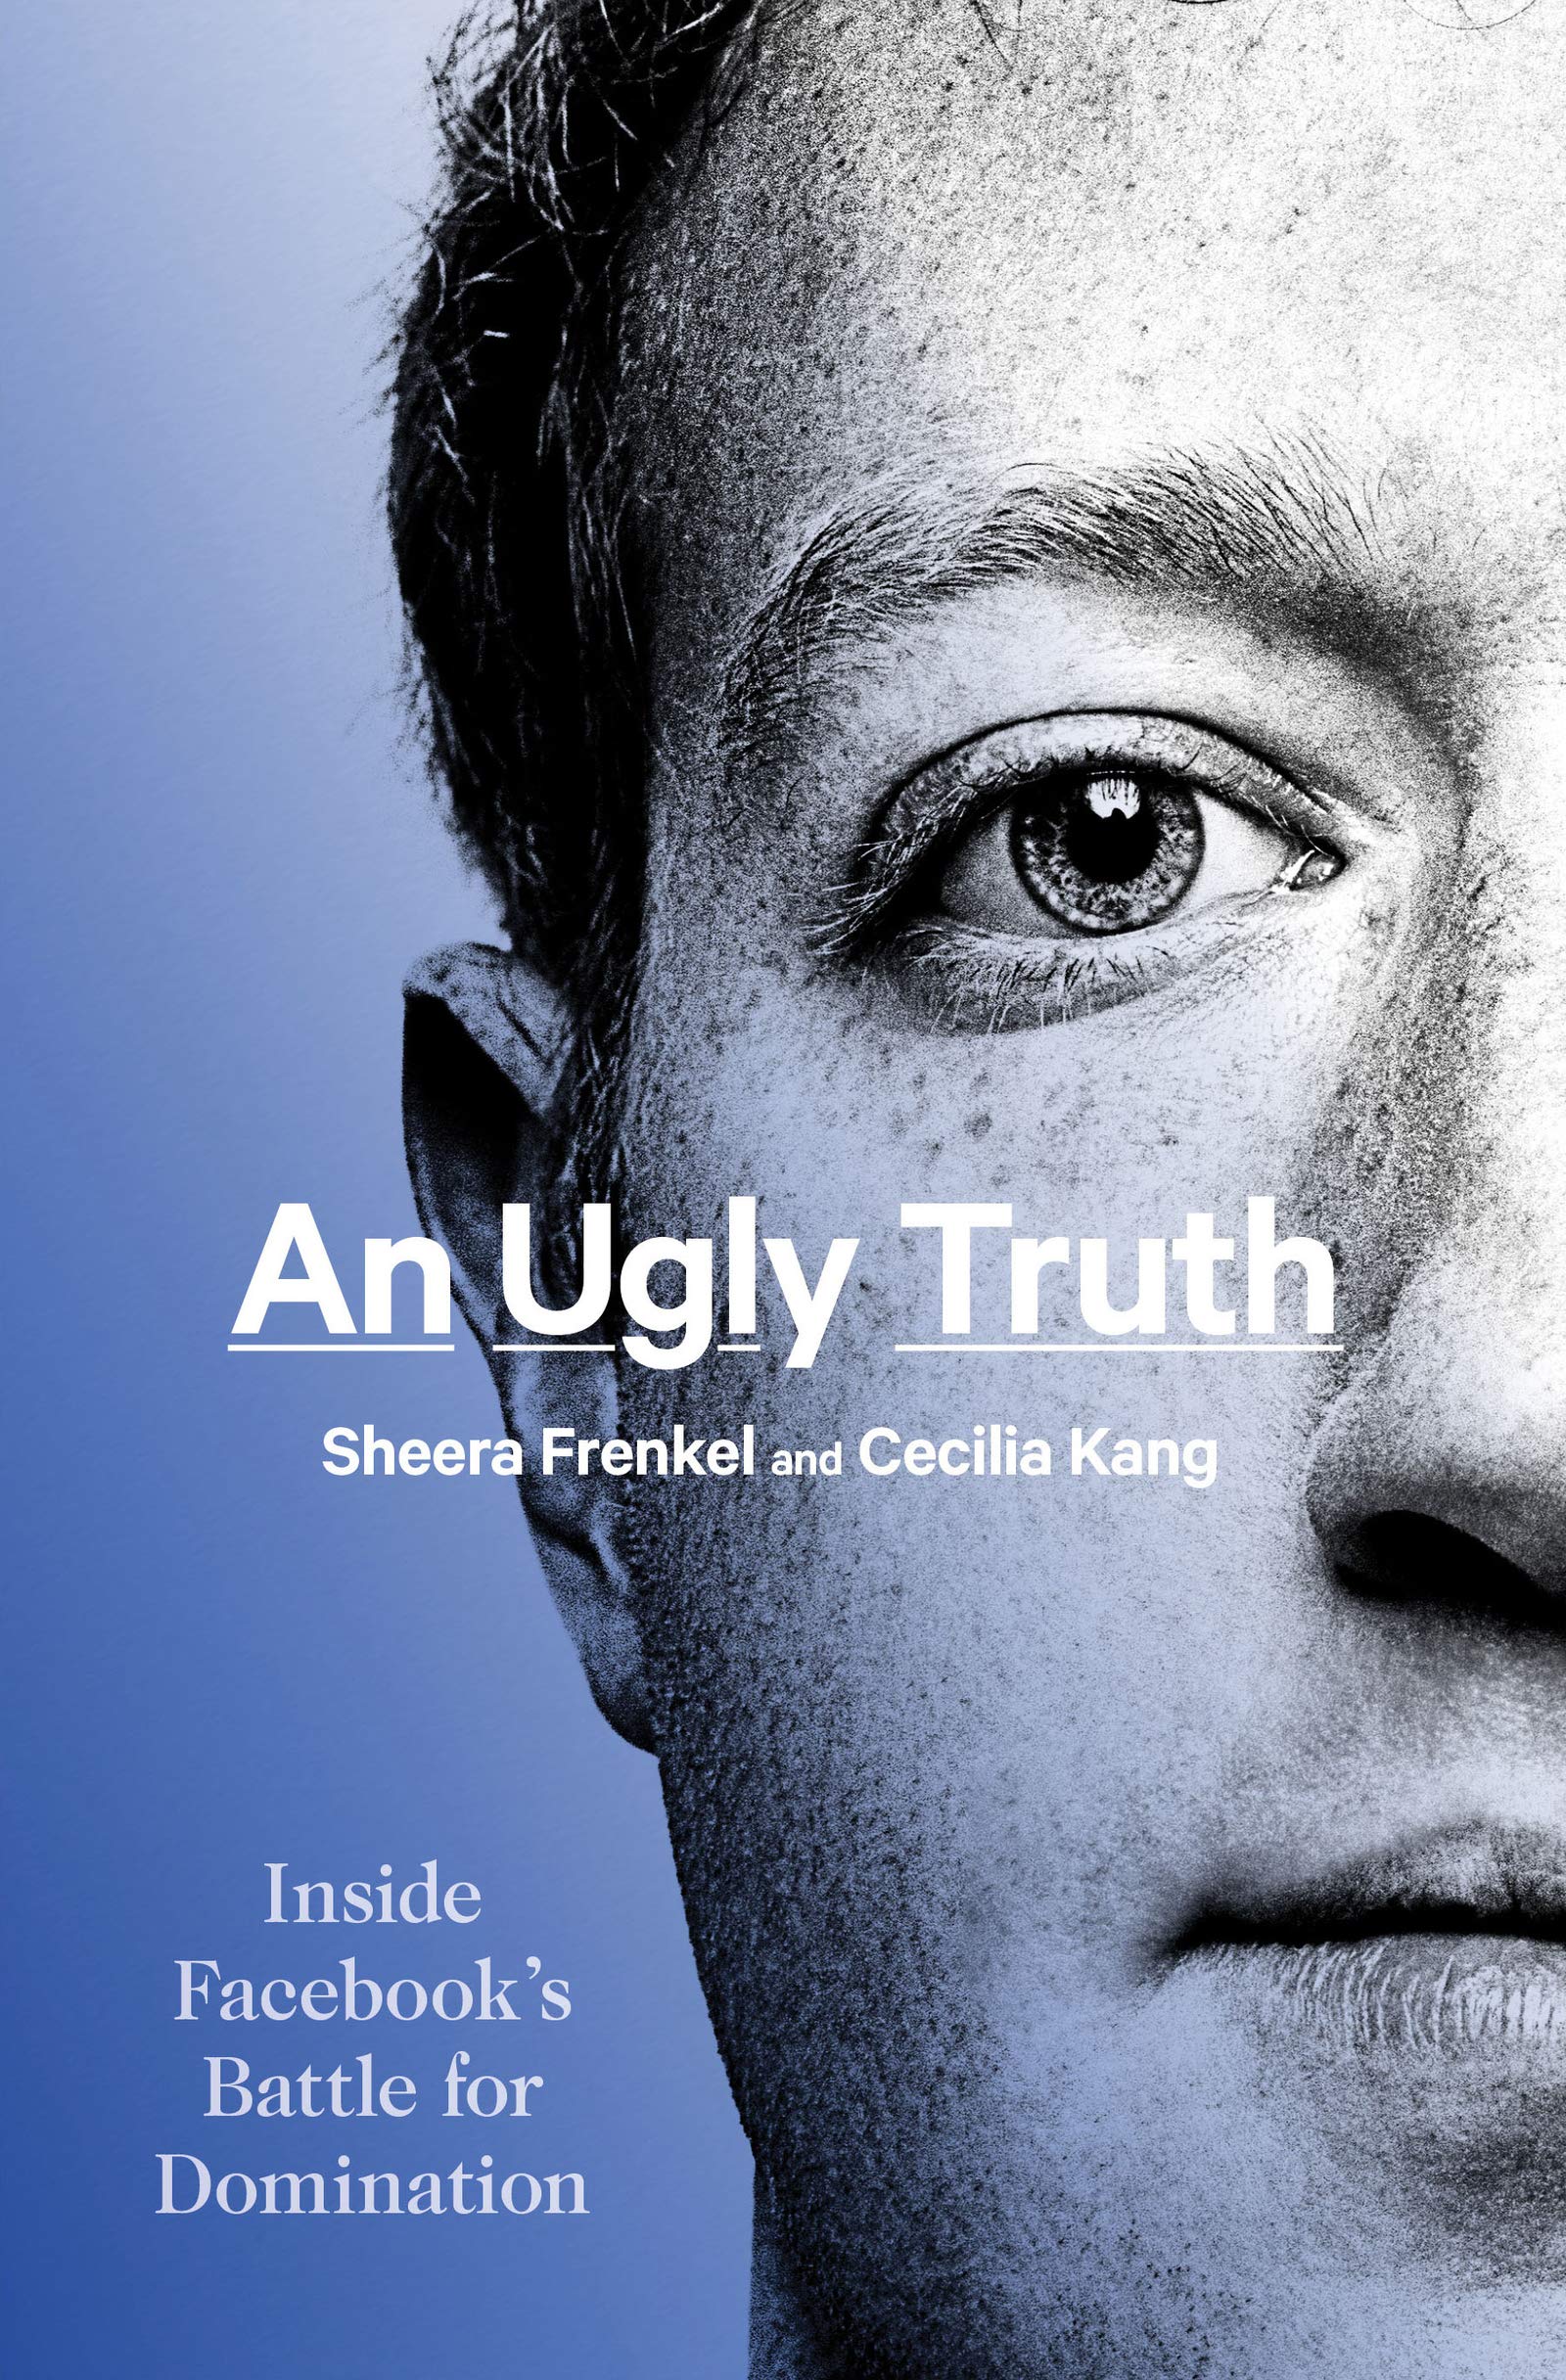 Book Cover: sheera-frenkel--an-ugly-truth.jpg